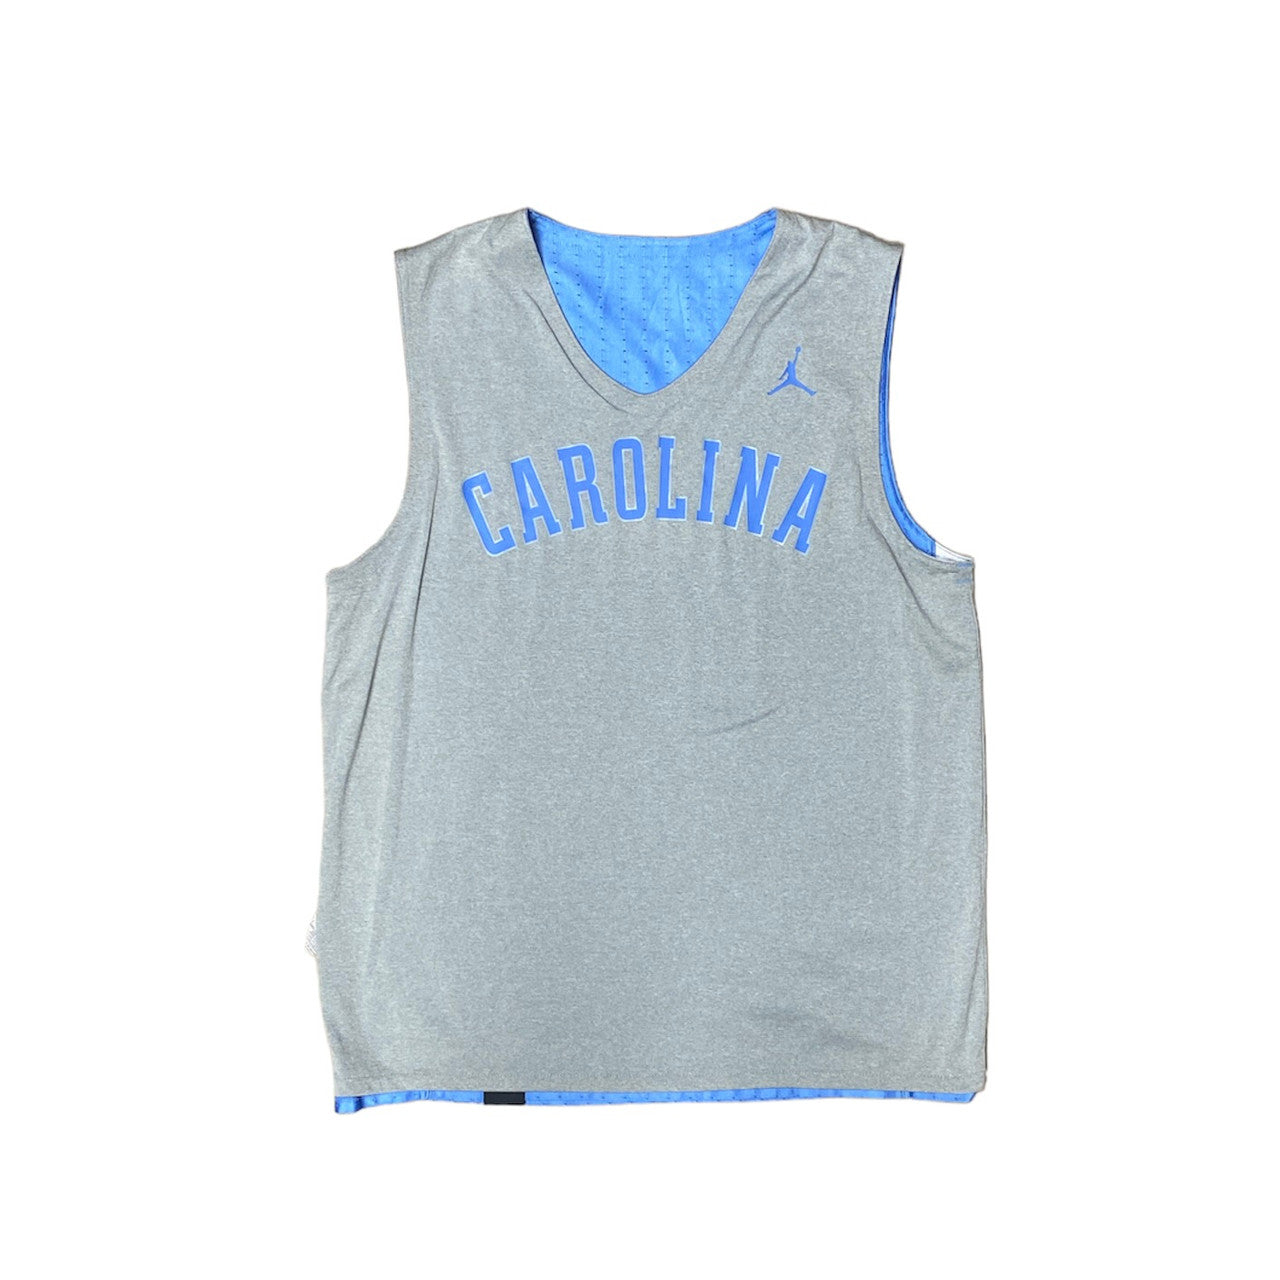 Jordan North Carolina Reversible Basketball Jersey